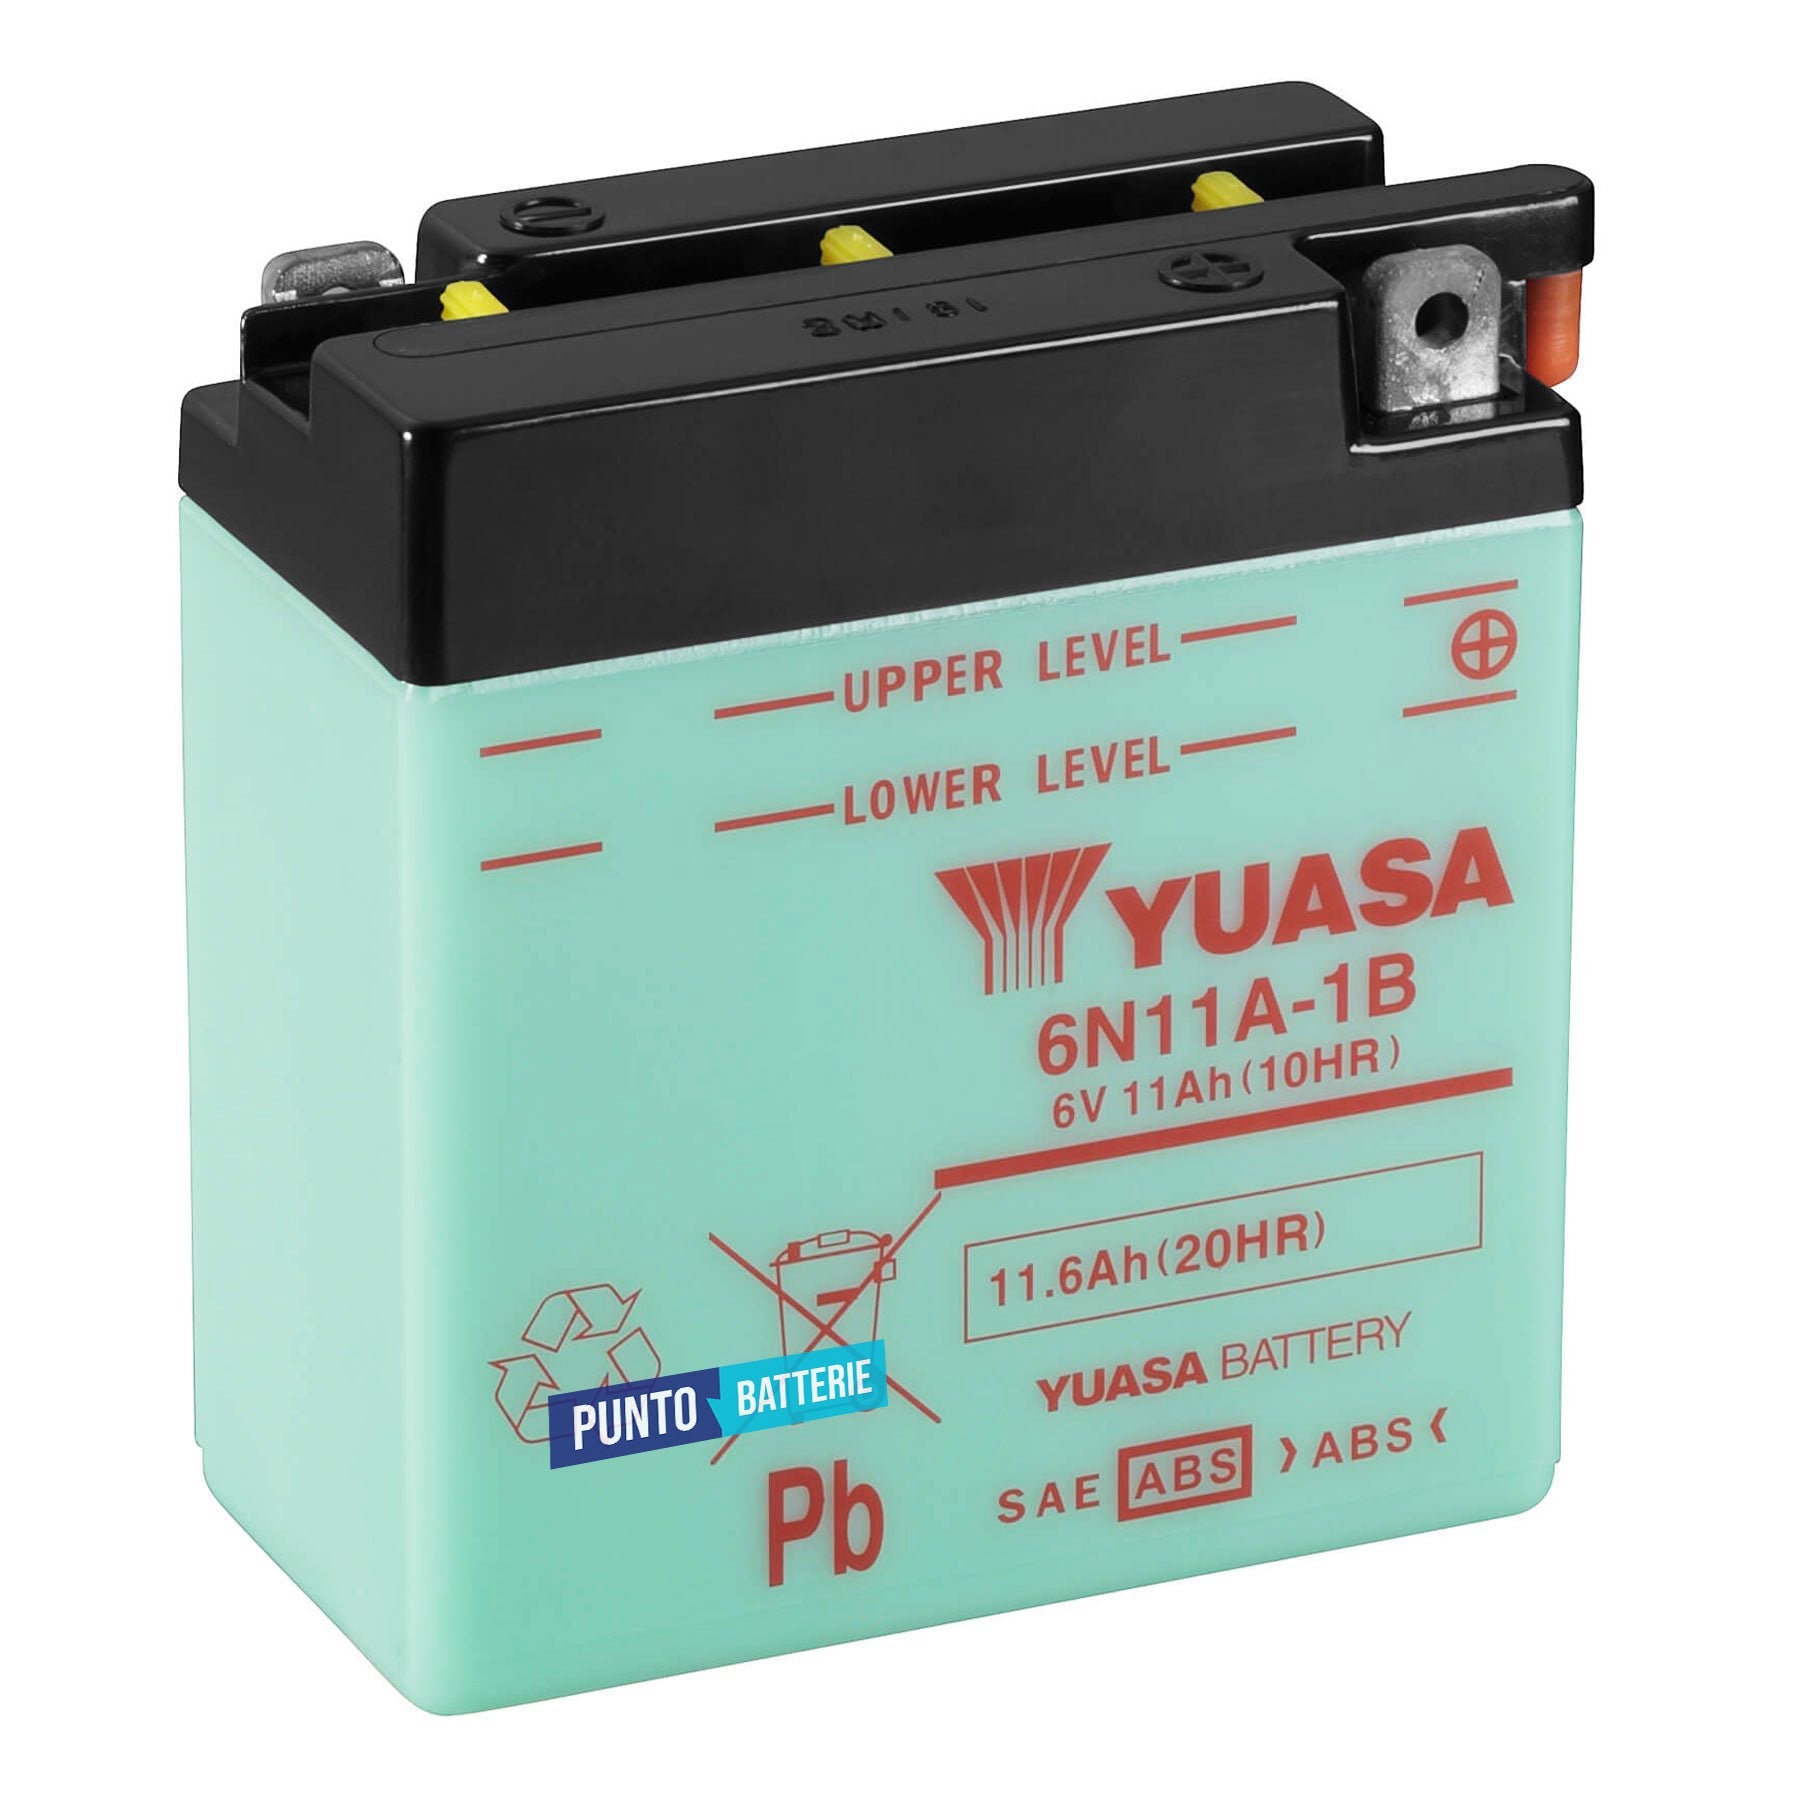 Batteria originale Yuasa Conventional 6N11A-1B, dimensioni 122 x 62 x 131, polo positivo a destra, 6 volt, 11 amperora. Batteria per moto, scooter e powersport.